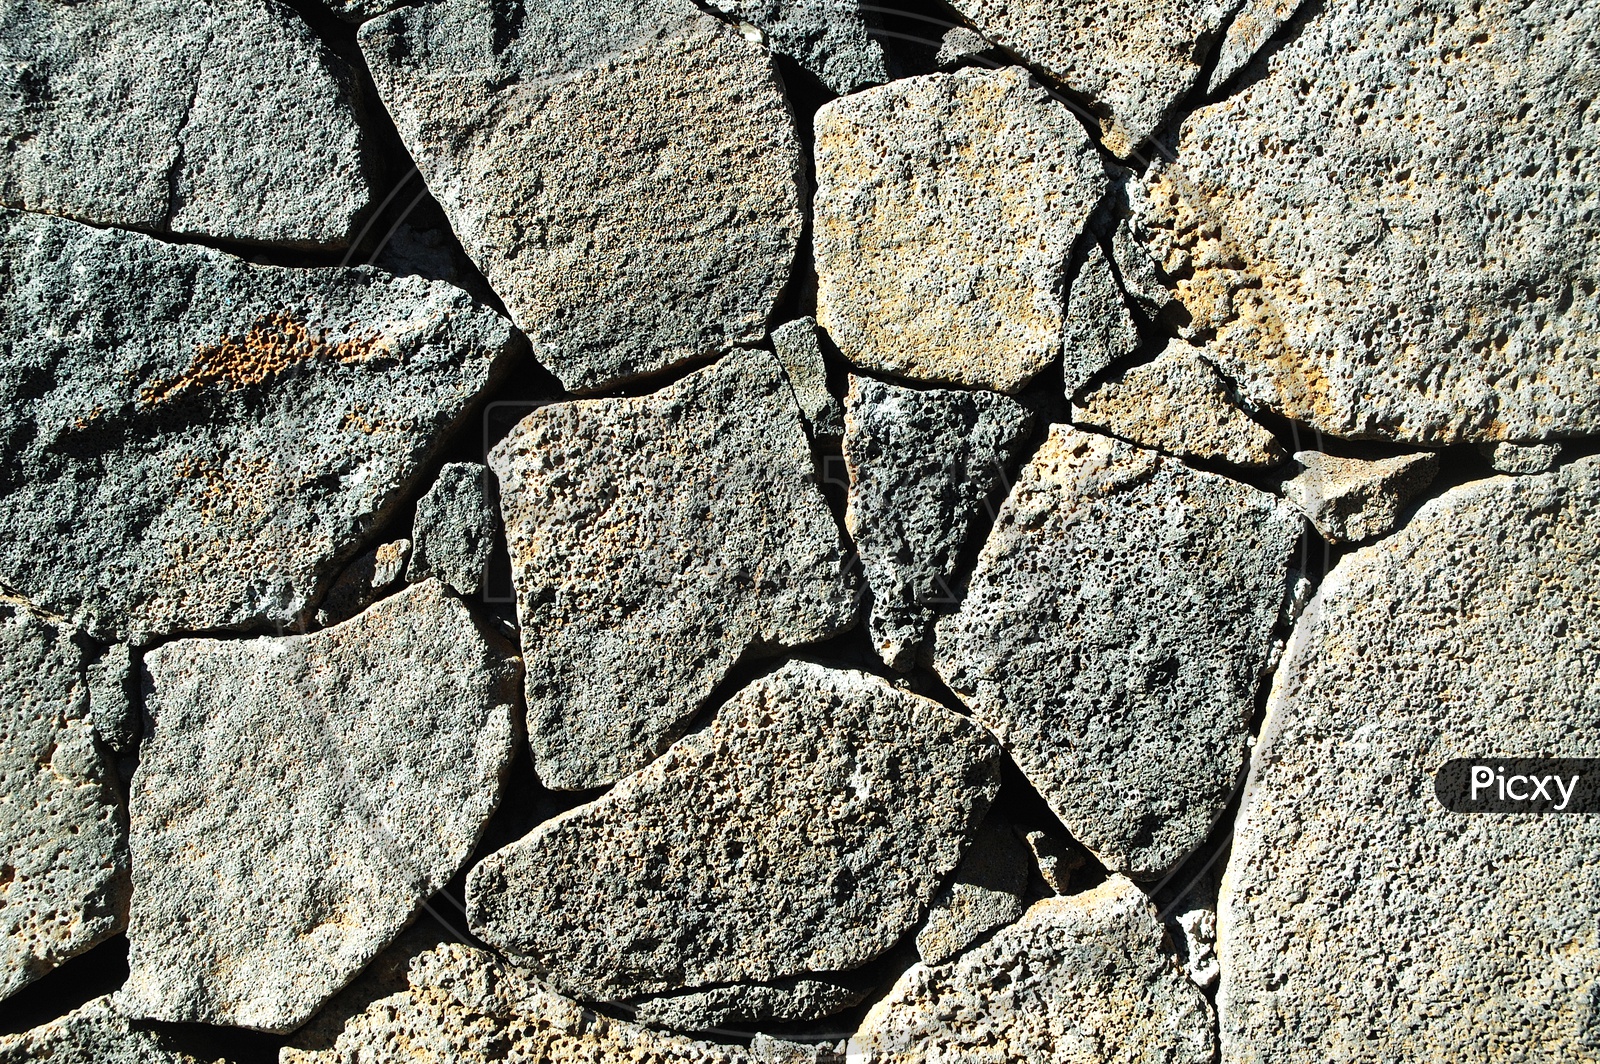 Assorted basalt rocks